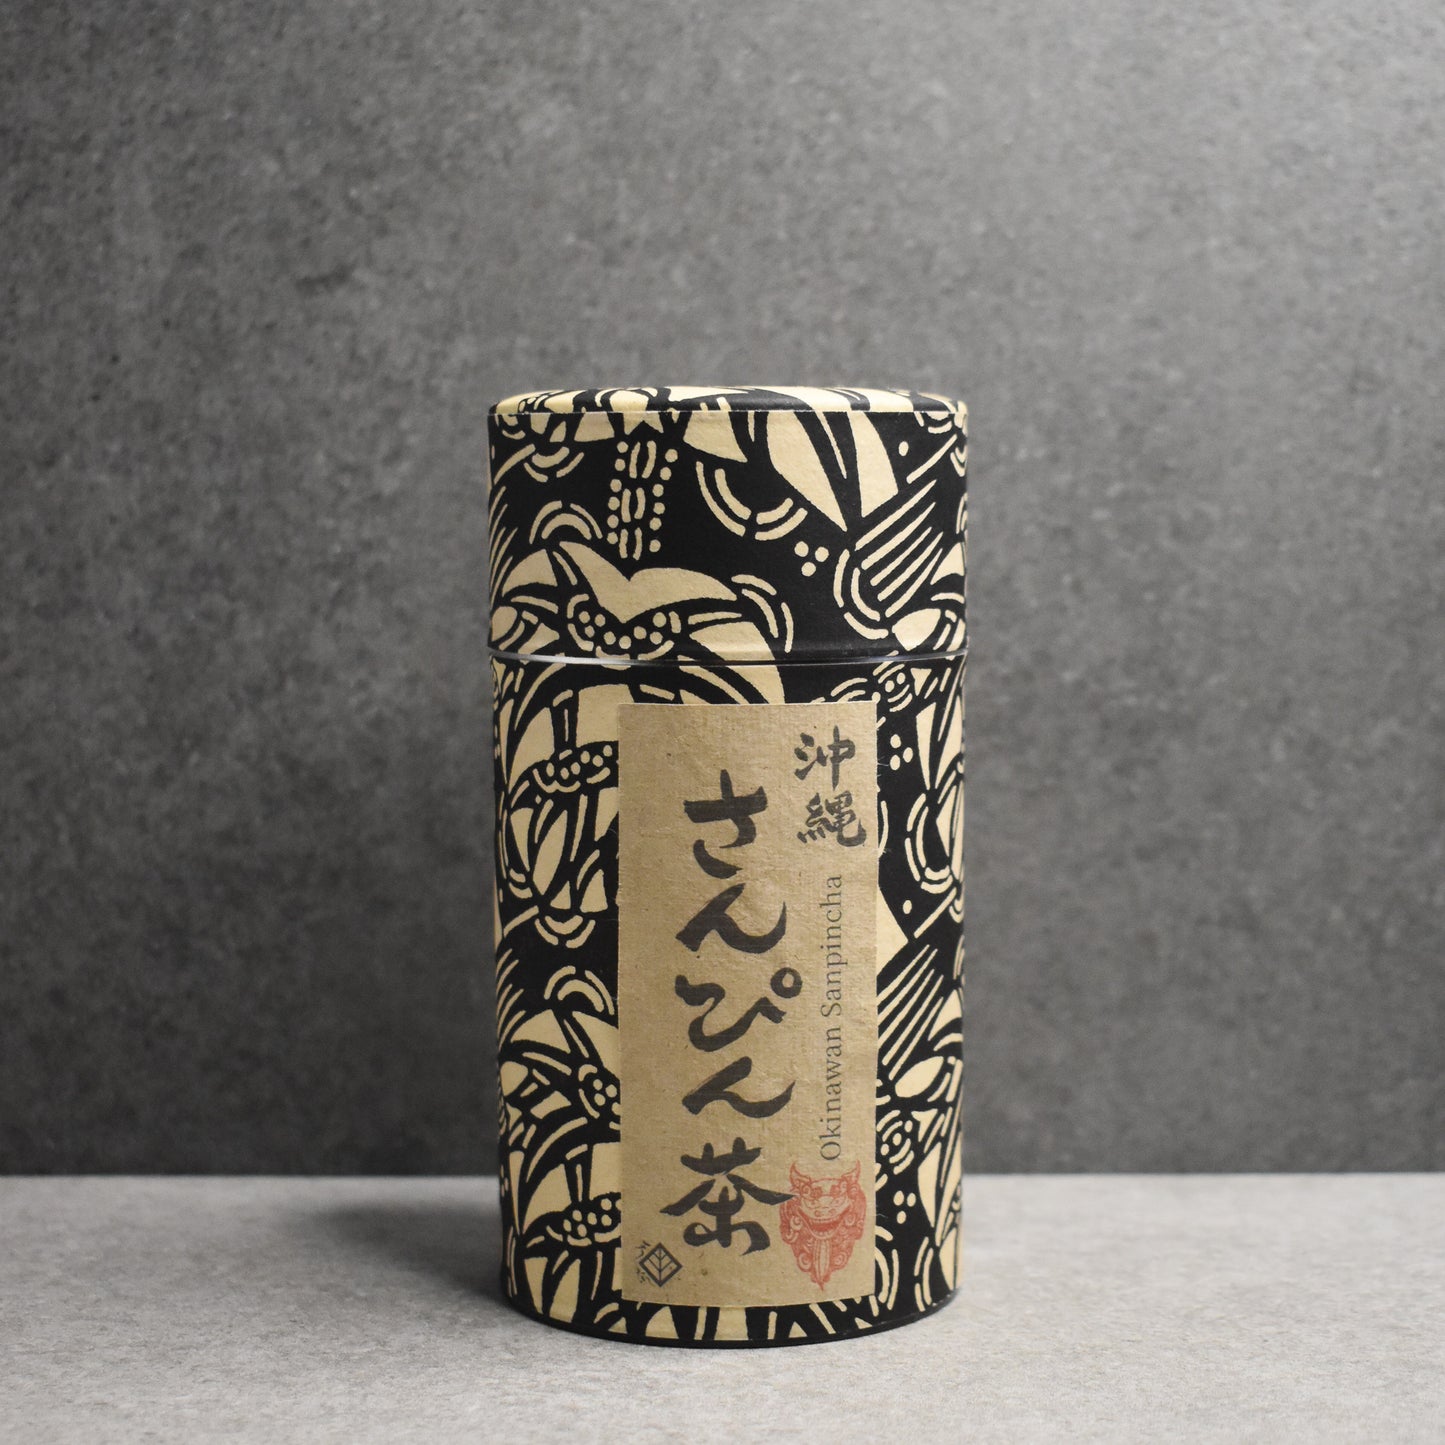 Nakazen: Sanpin Cha, Okinawa Jasmine Tea